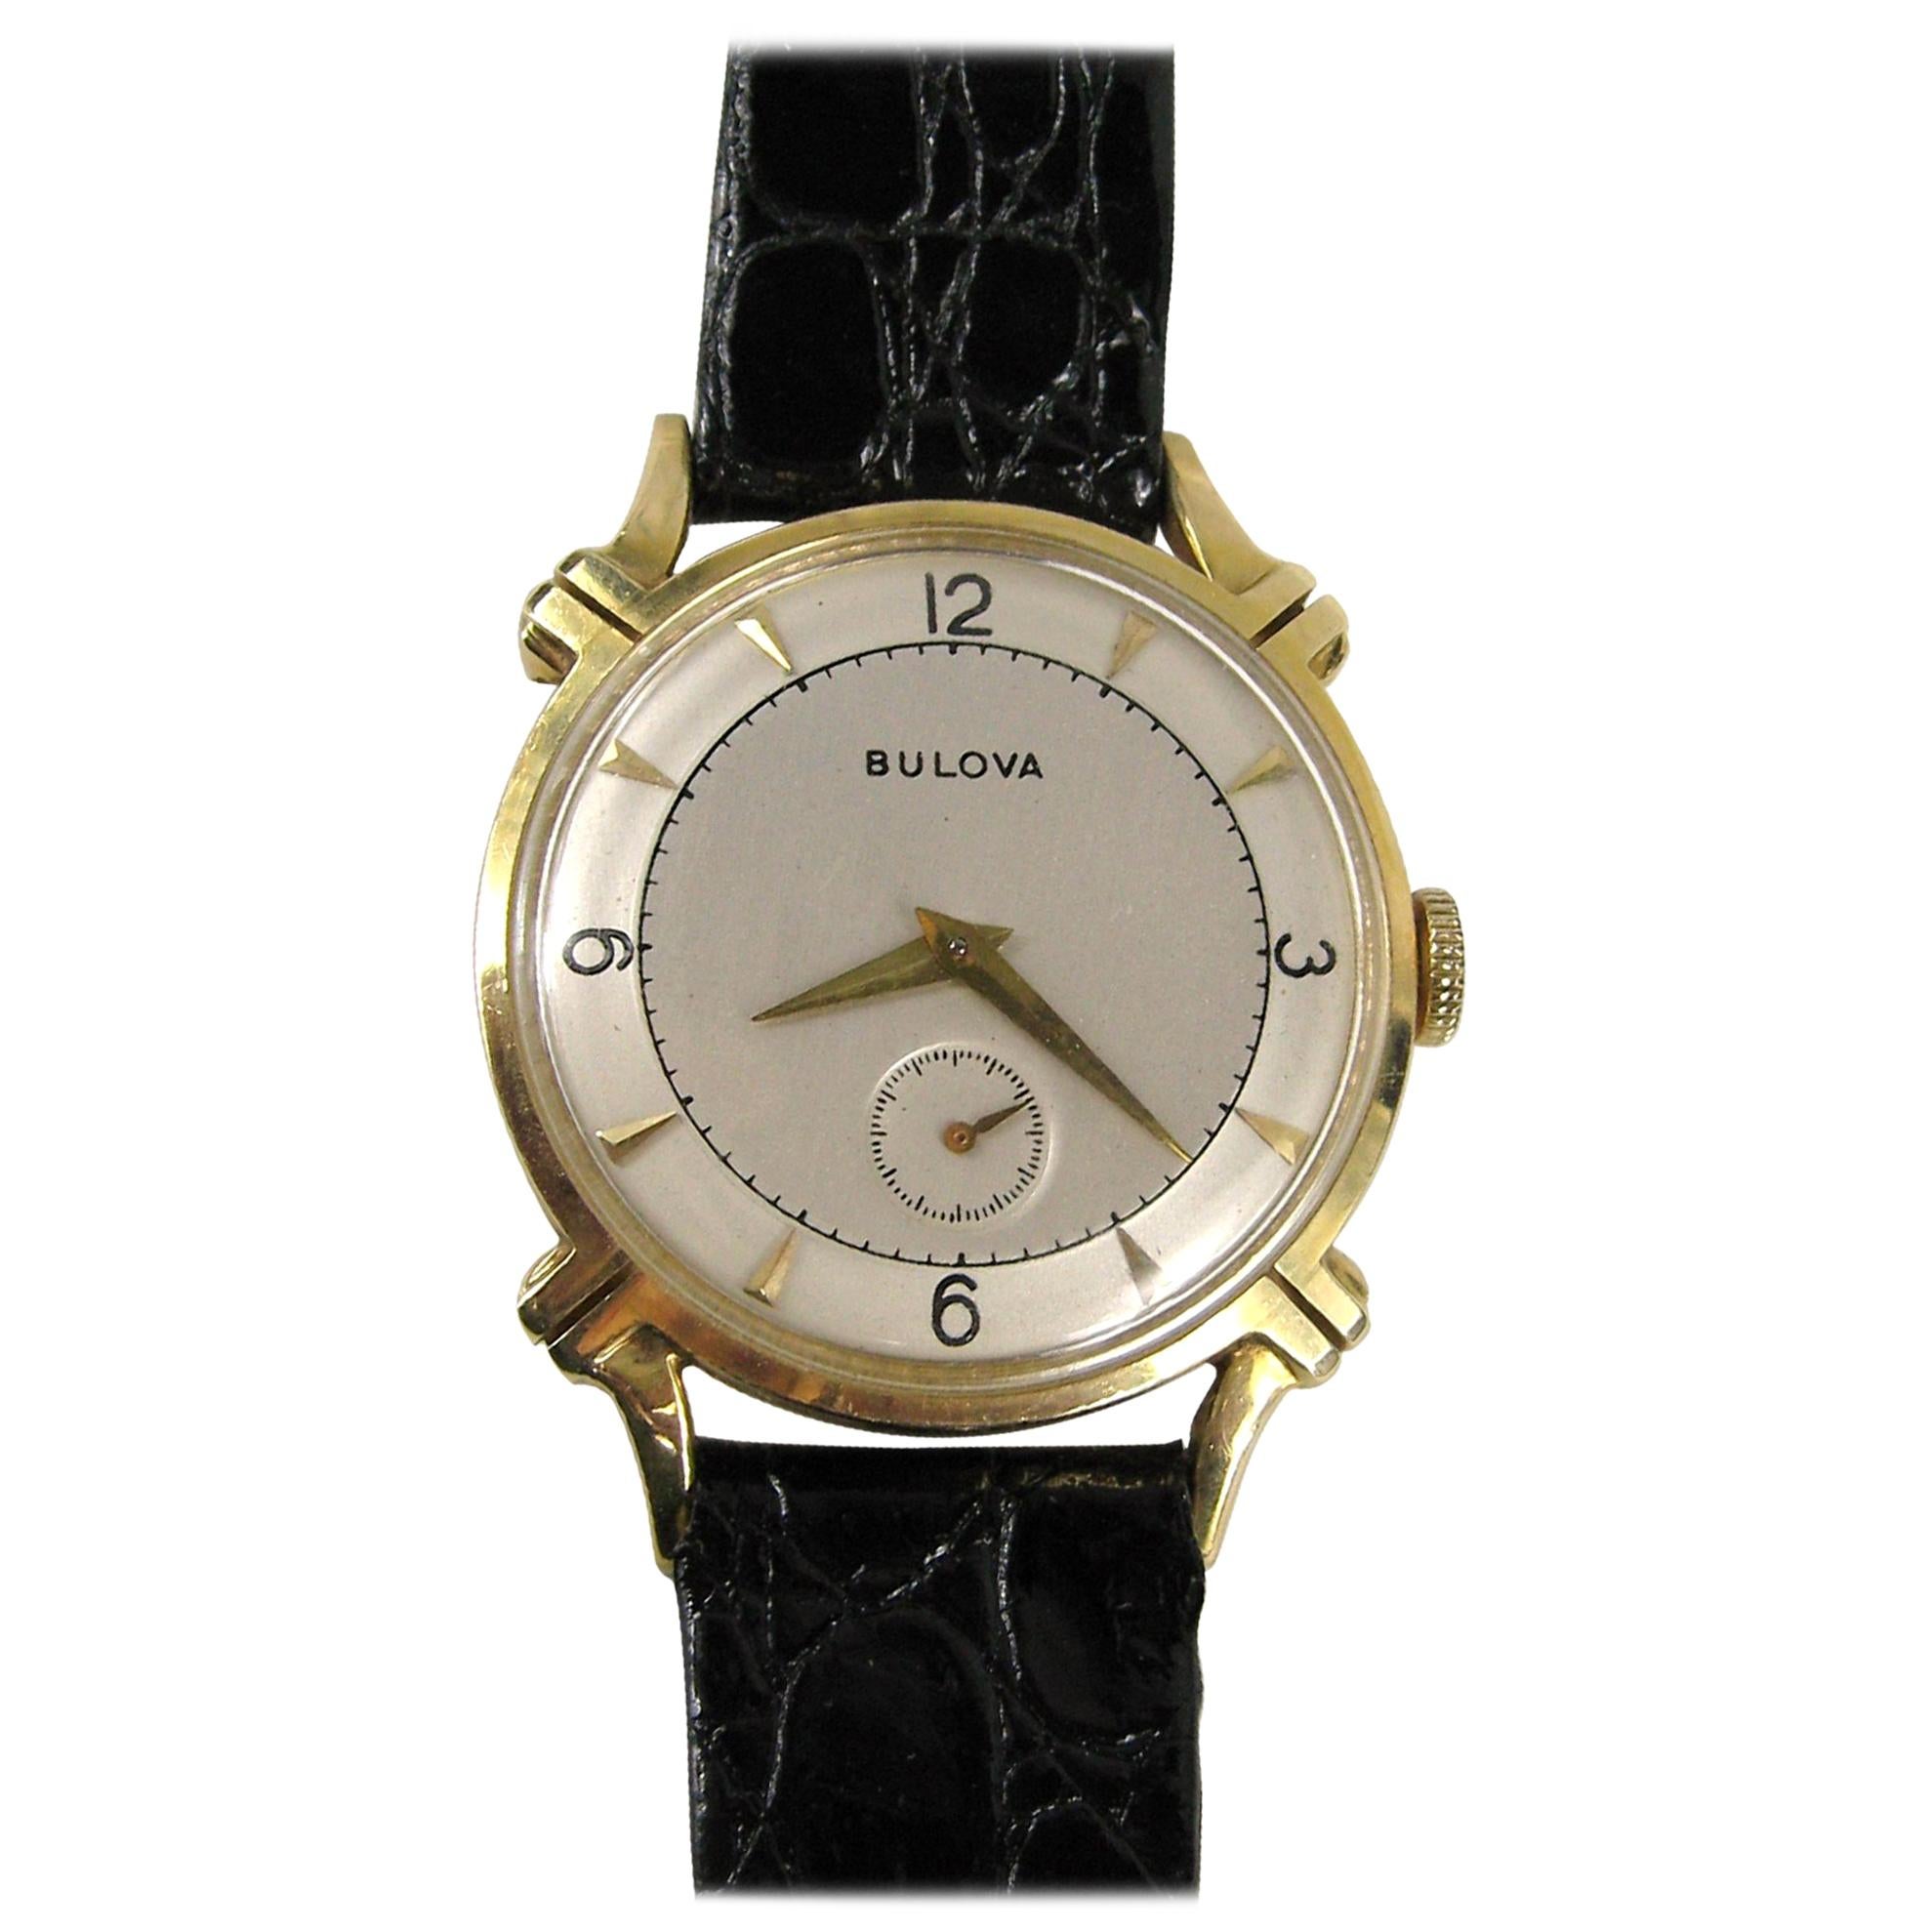 Bulova 14 Karat Yellow Gold Men's Wristwatch, 1950s